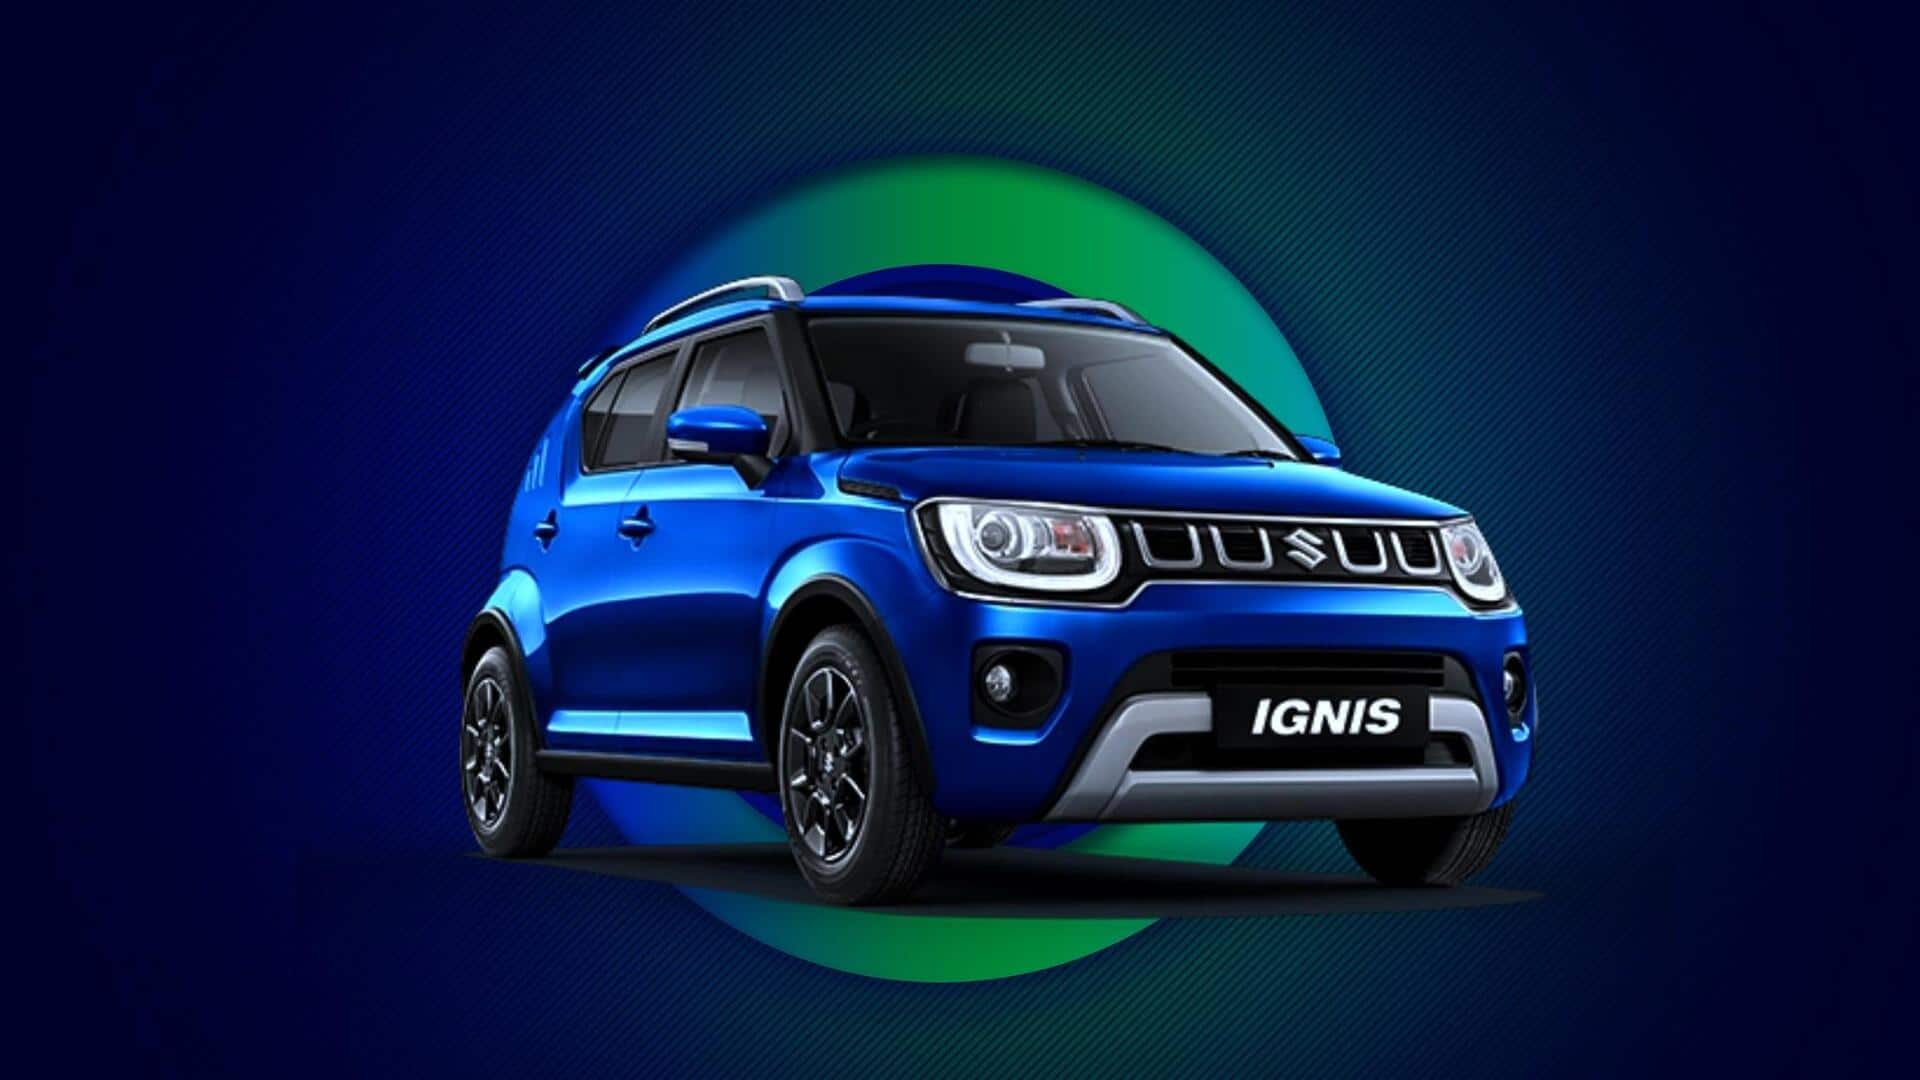 Price cut for select Maruti Suzuki Ignis variants in India